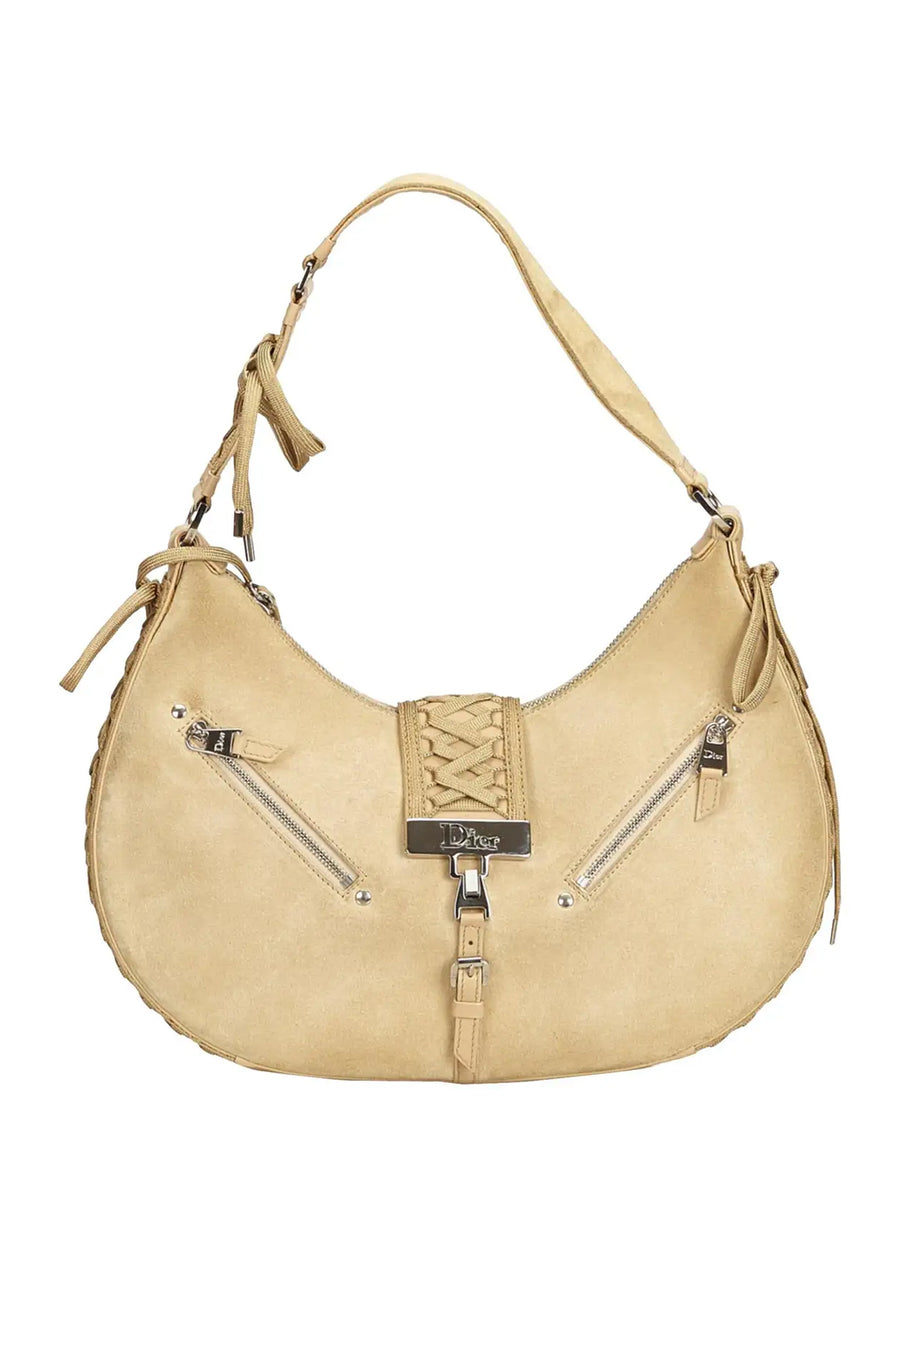 Vintage Christian Dior "Admit it" Bag